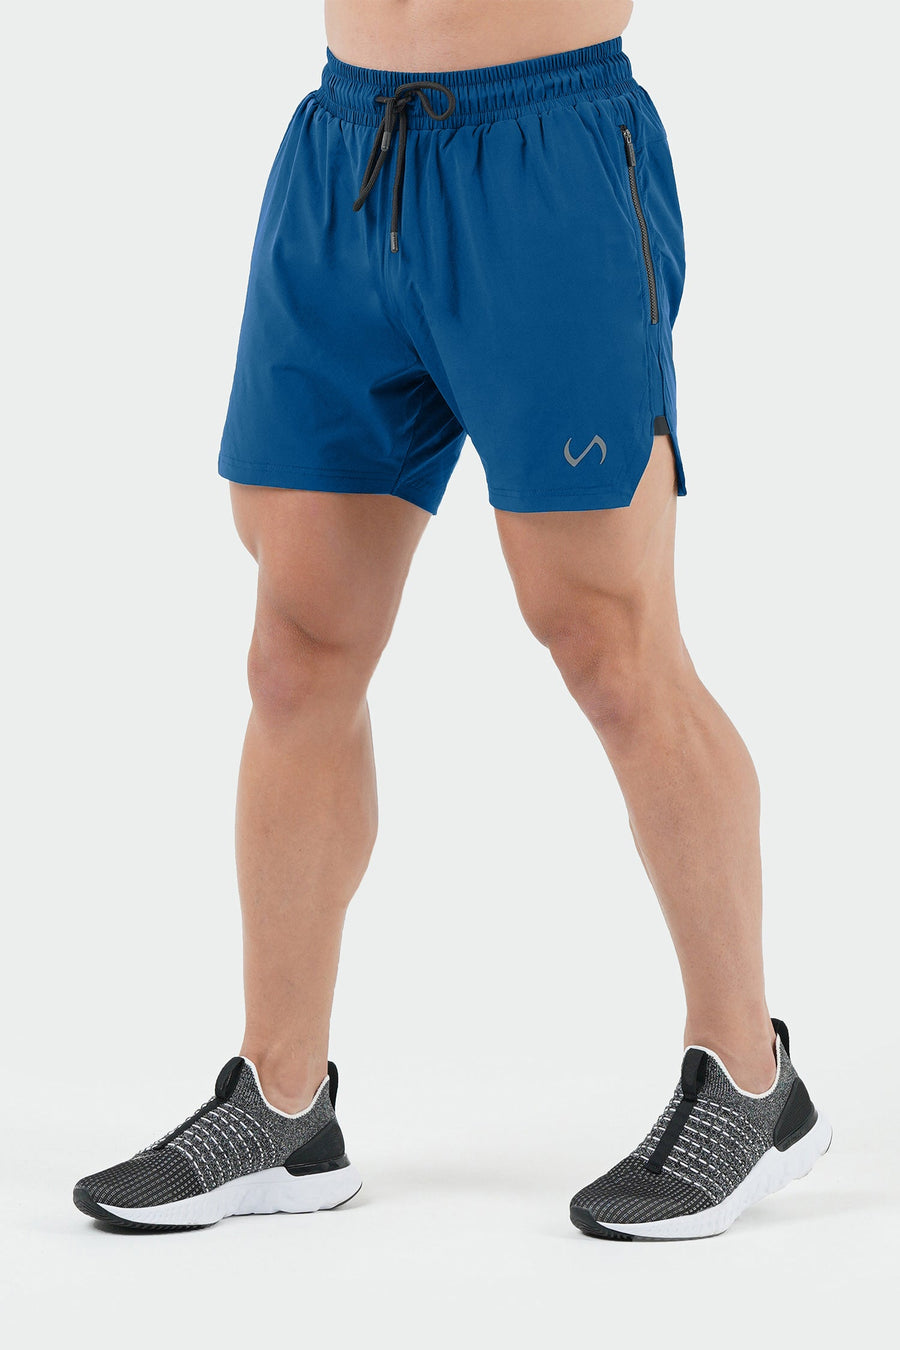 Vital Element 5 Inch Gym Shorts